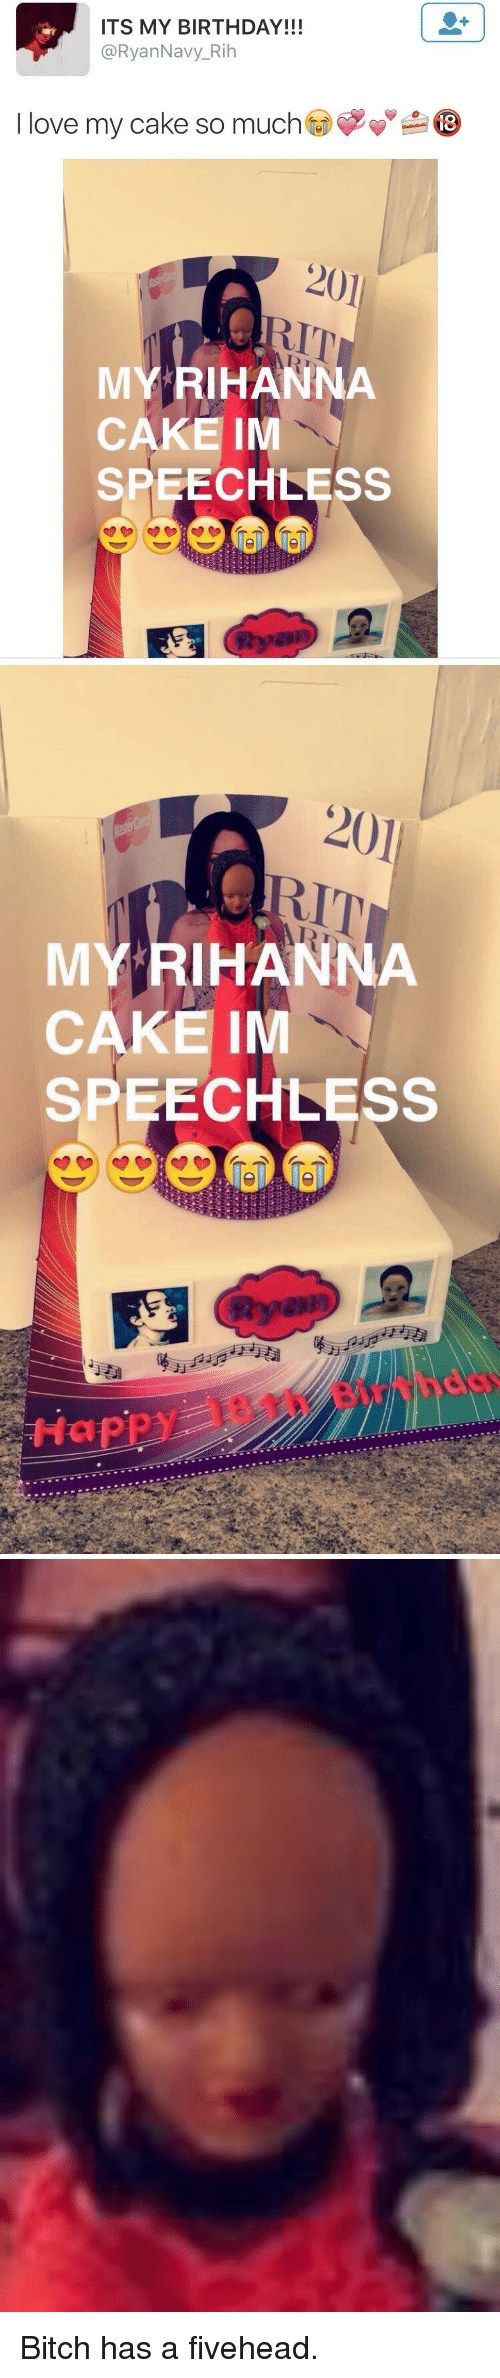 Birthday Cake Rihanna Mp3
 Rihanna Birthday Cake Mp3 Download Free Rihanna Age Albums